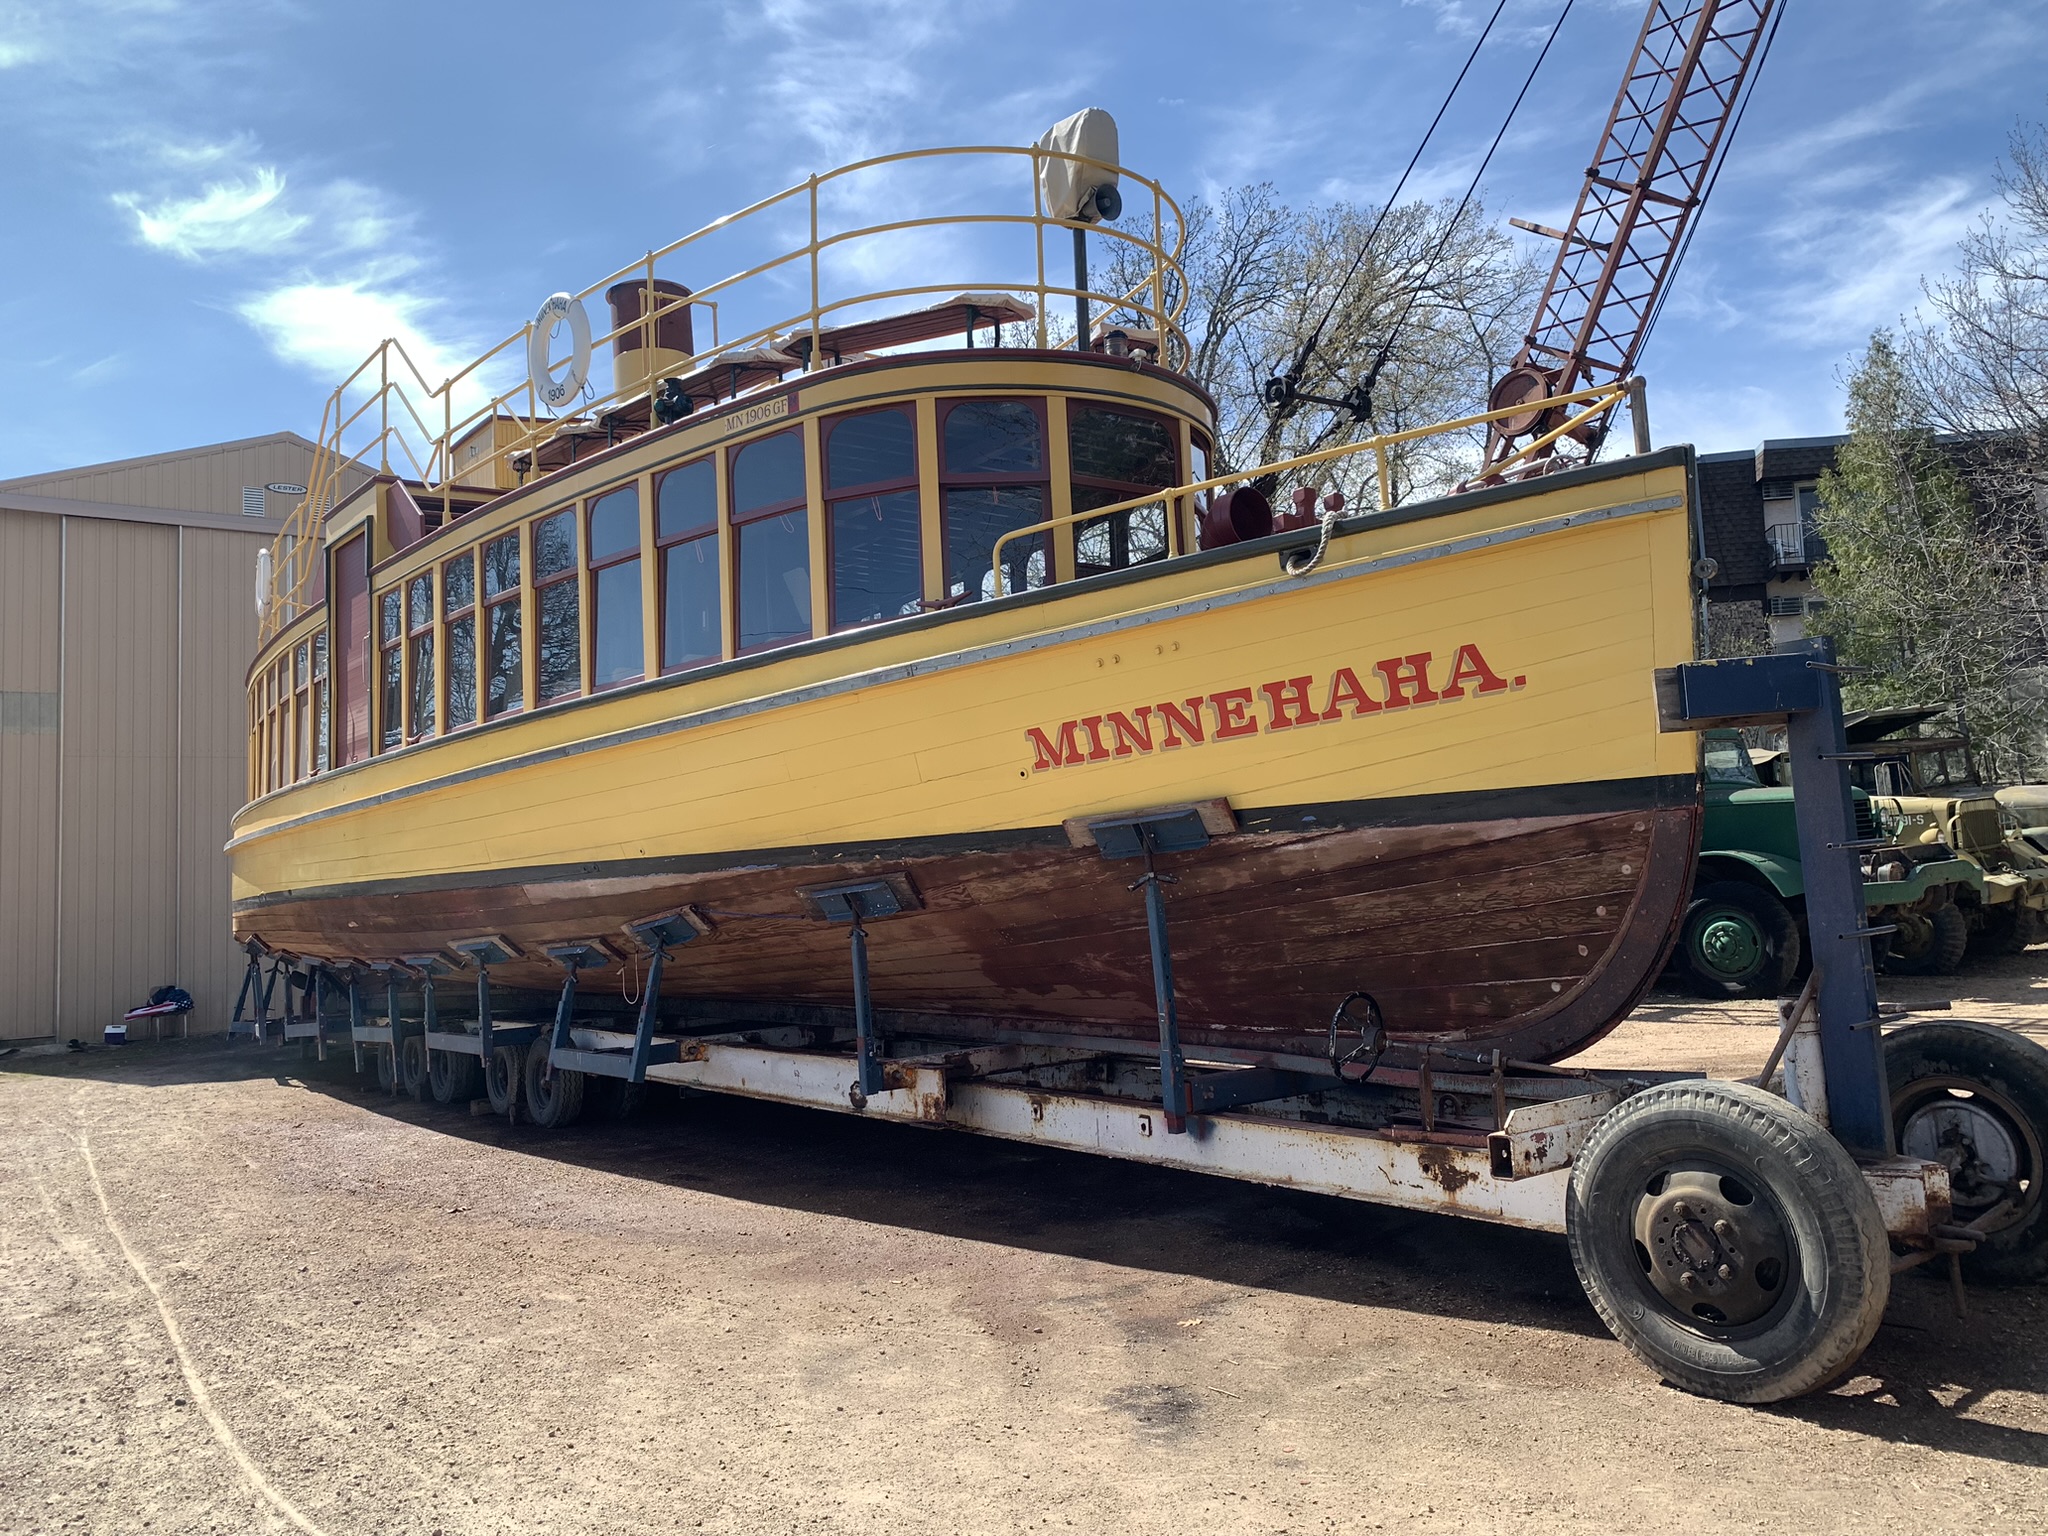 Minnehaha Steamboat